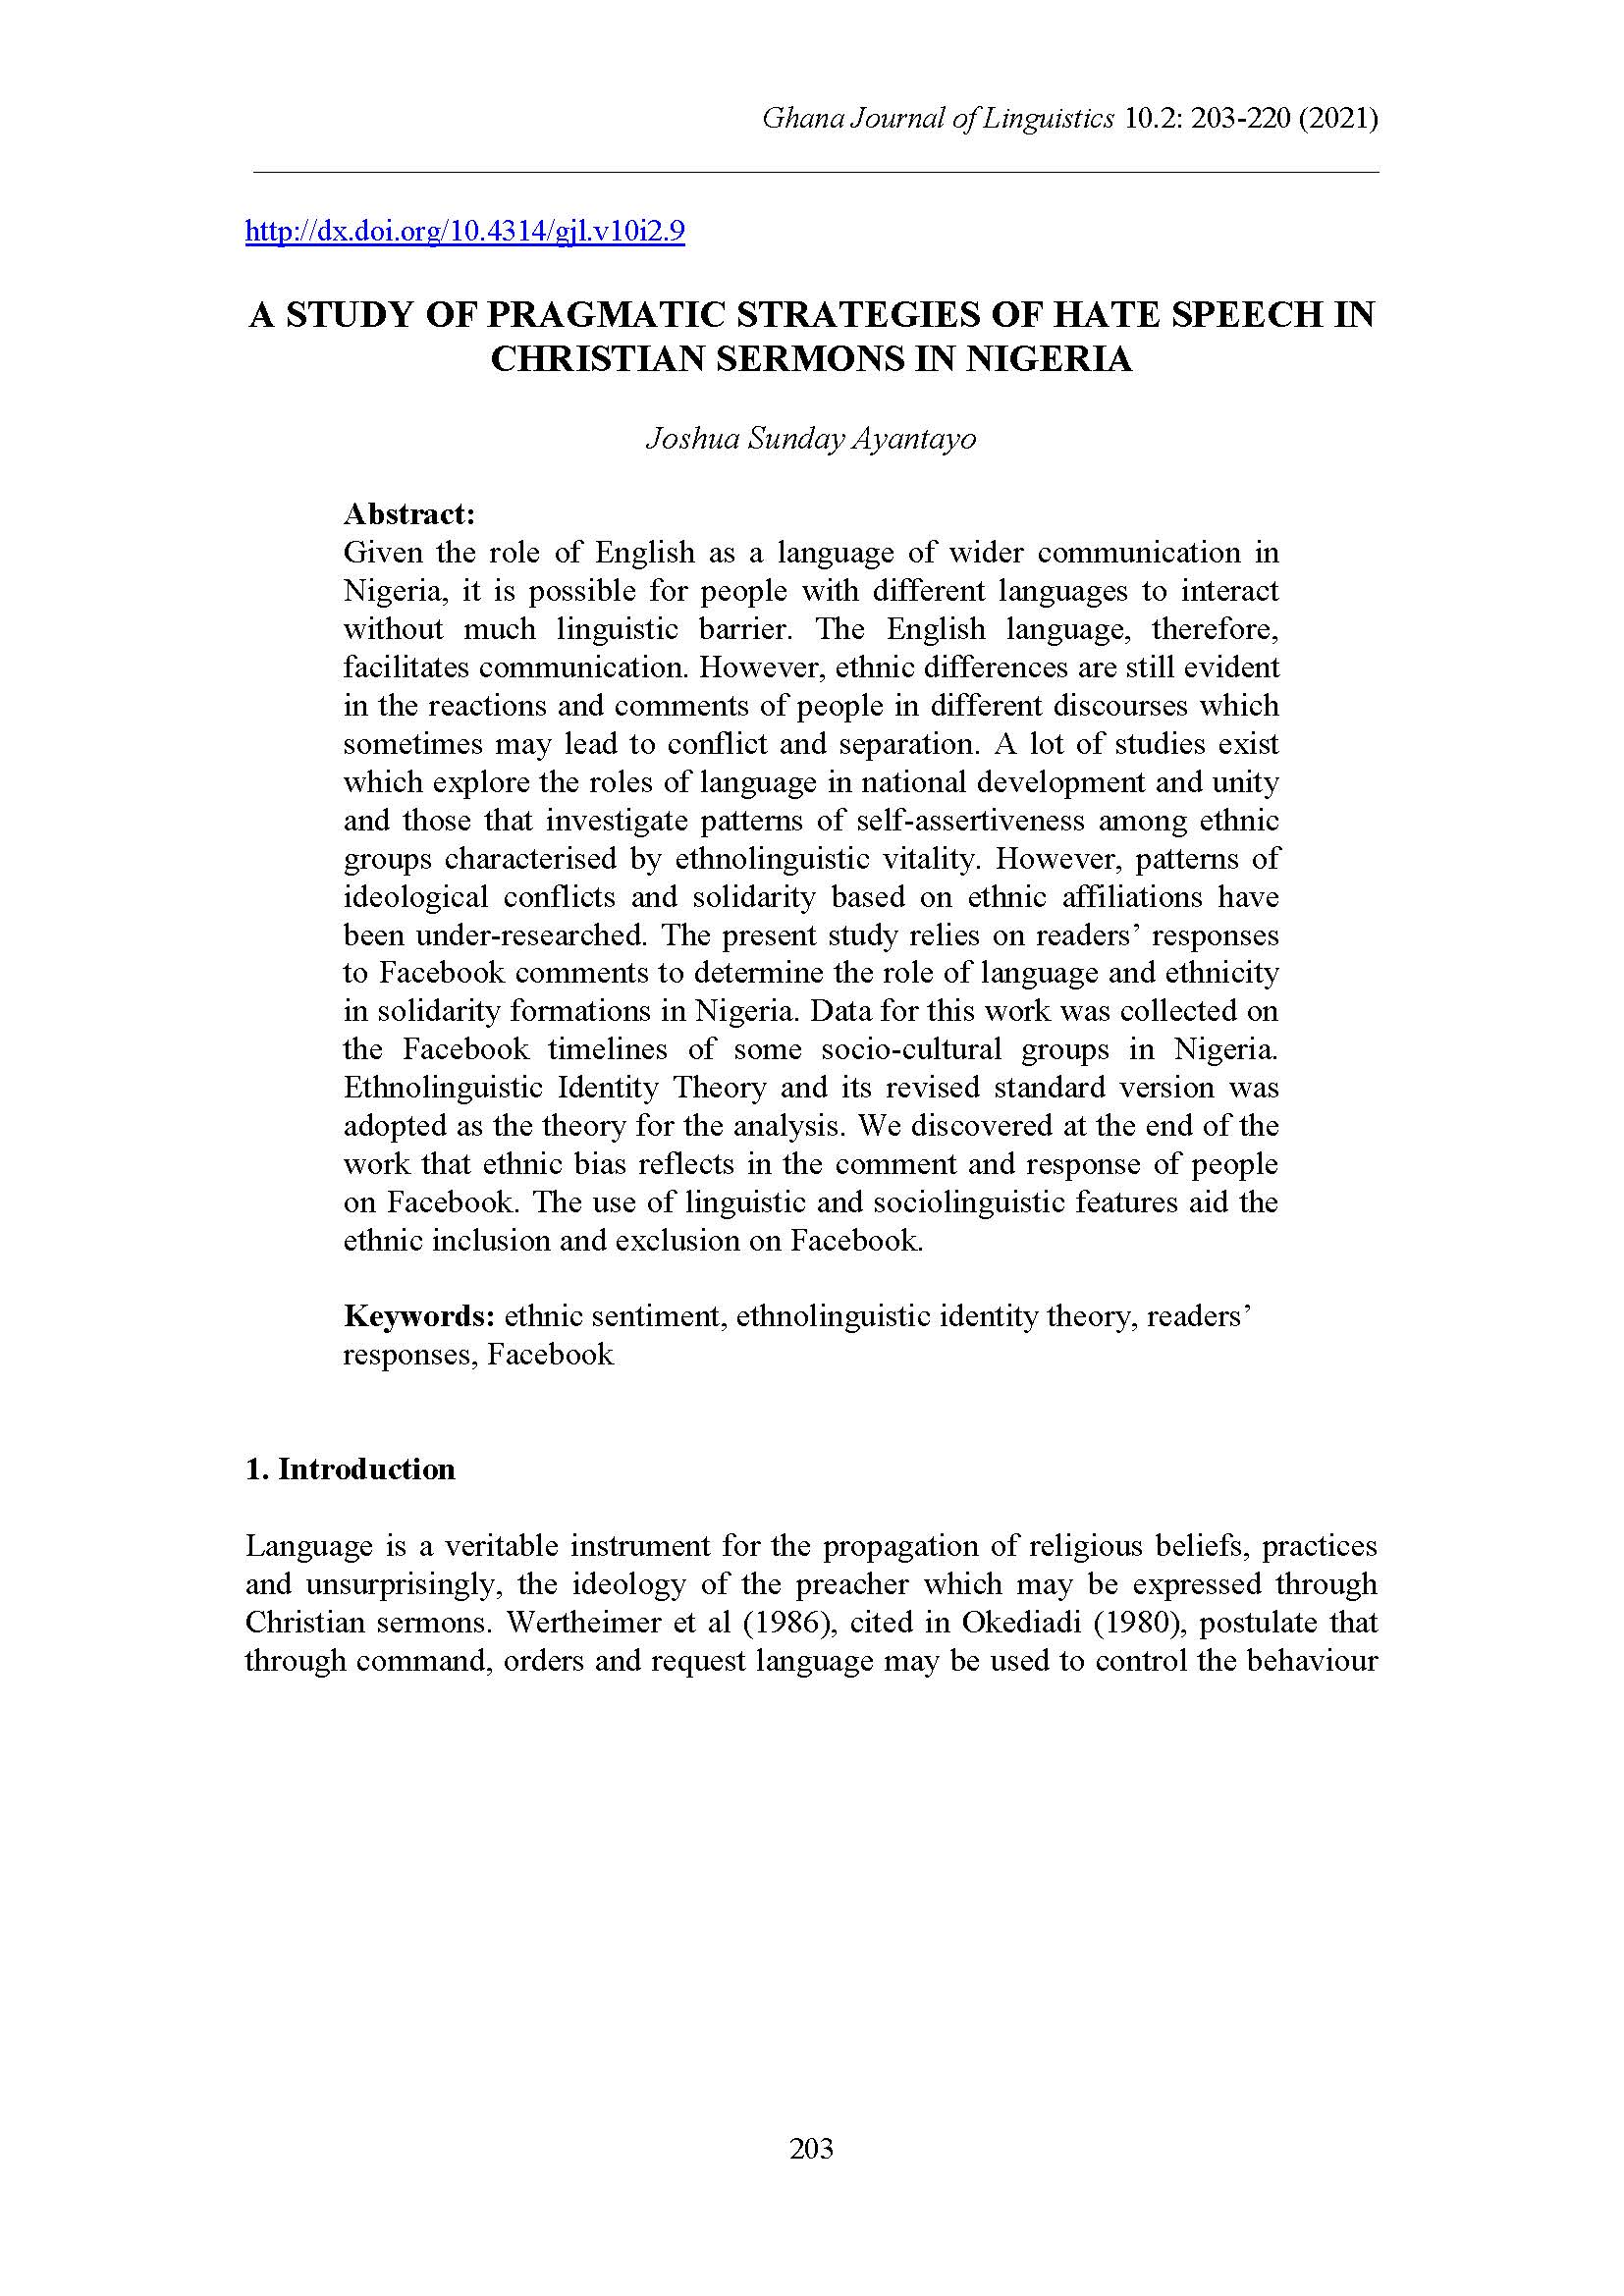 A Study of Pragmatic Strategies of Hate Speech in christian Sermons in Nigeria